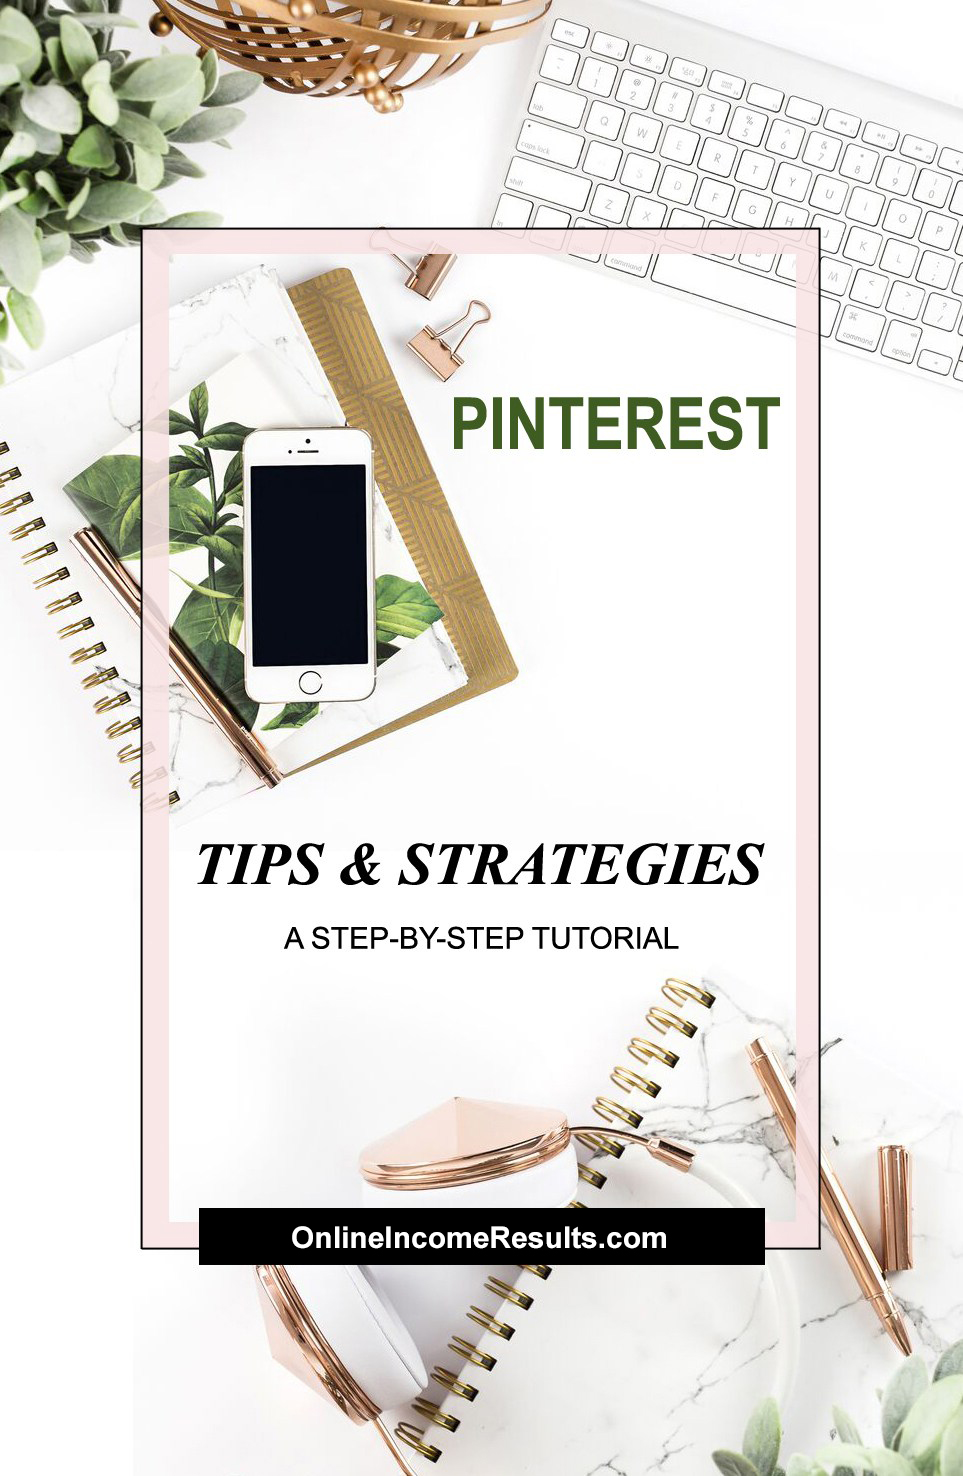 Achieve Success with Pinterest